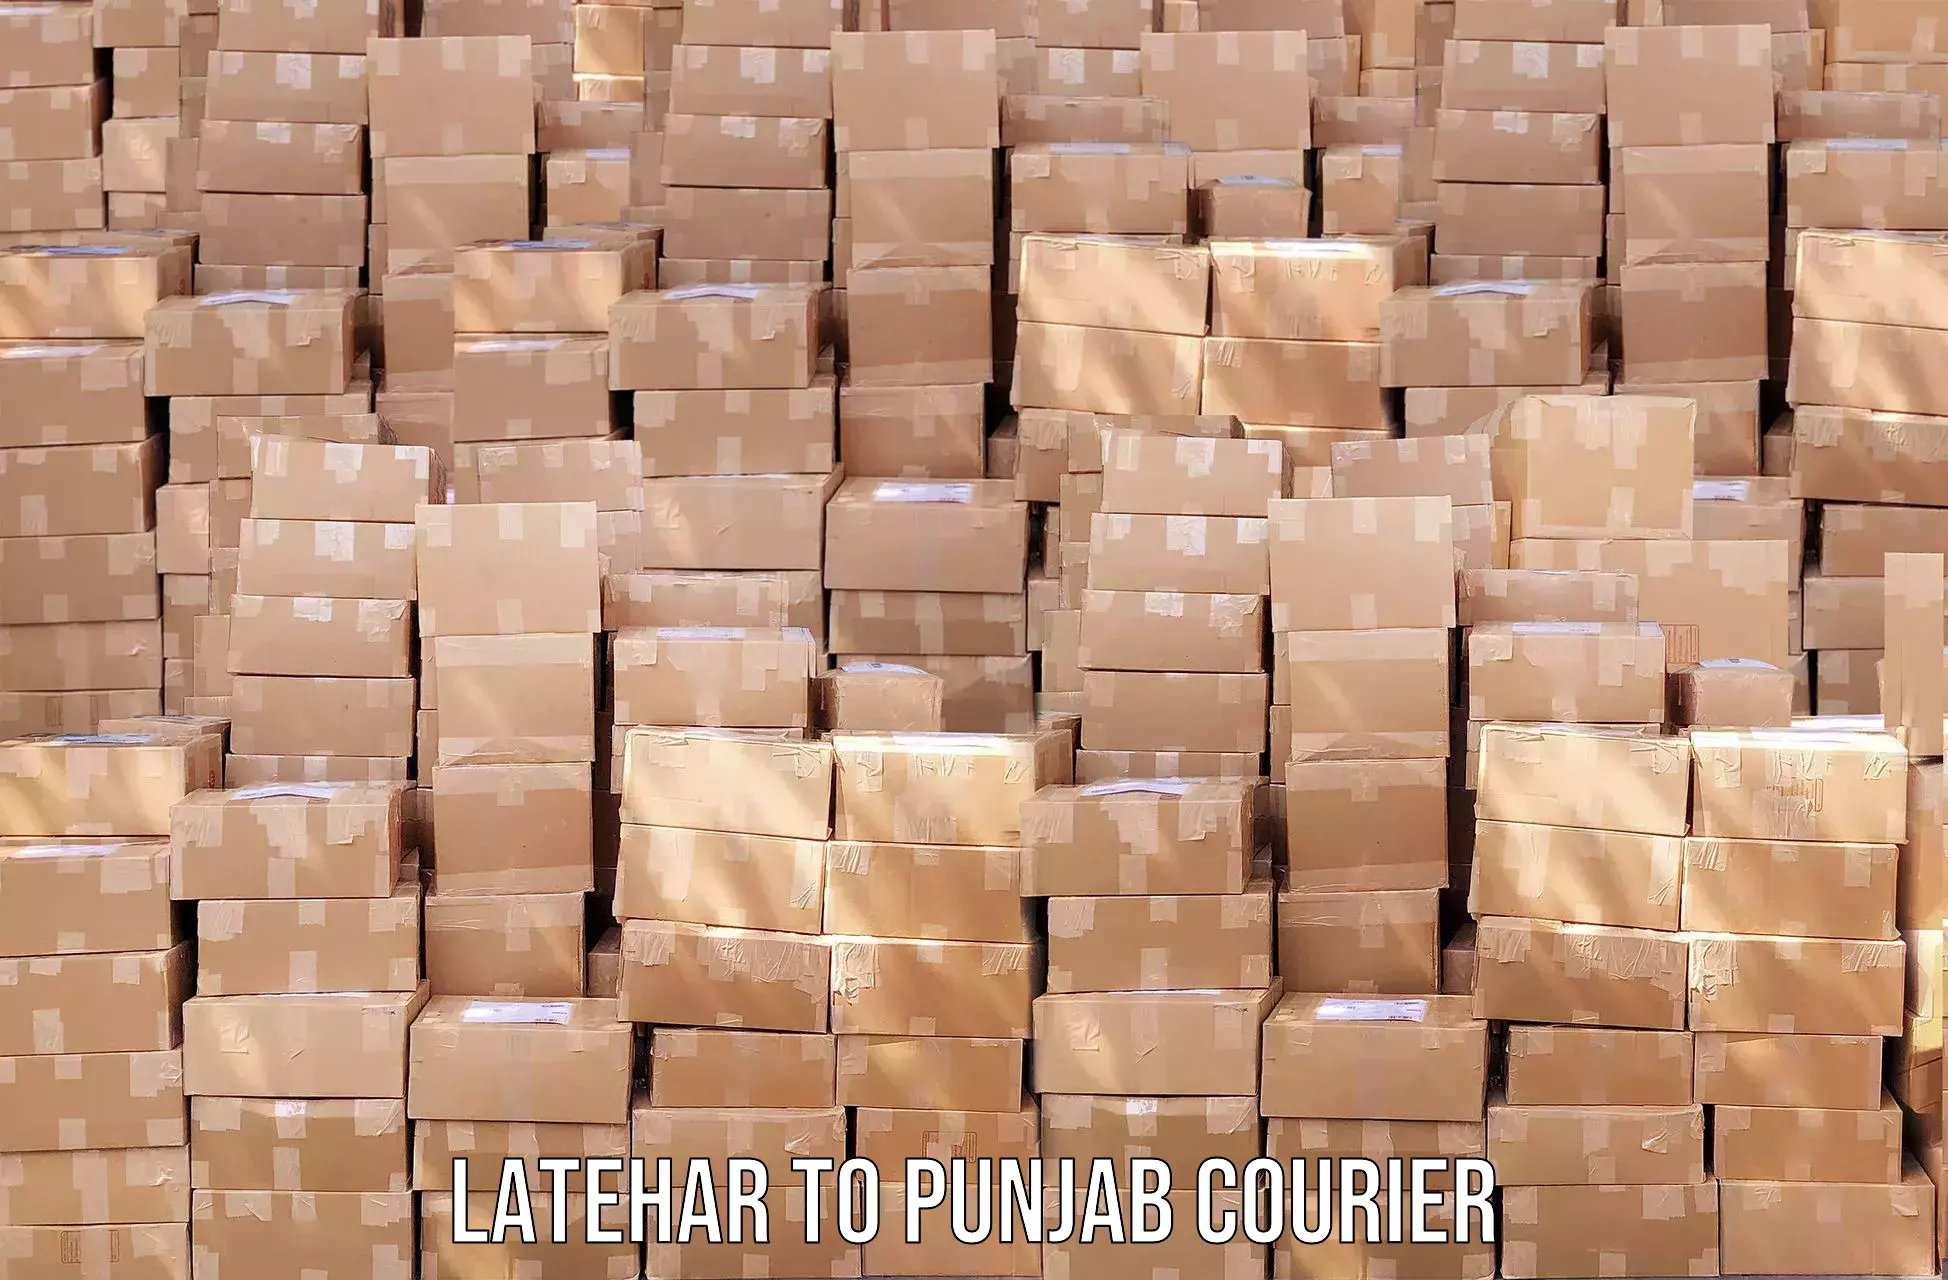 Lightweight parcel options Latehar to Mohali